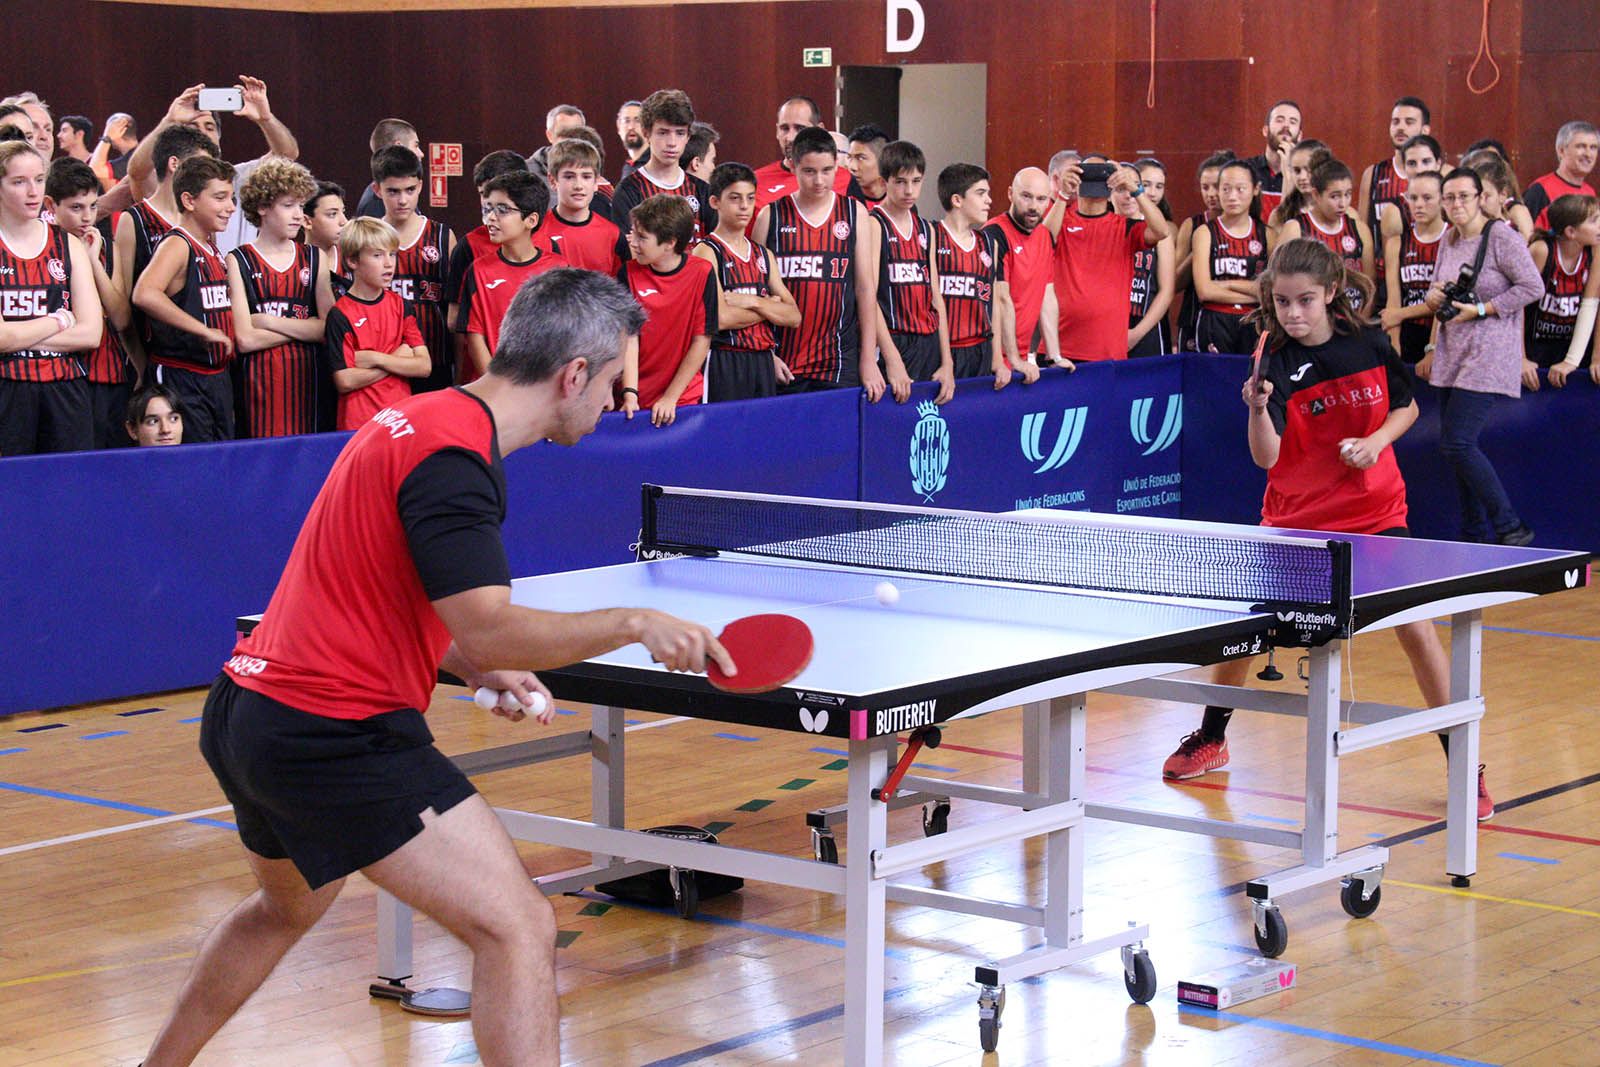 Un partit de tennis taula de la UESC. Foto: Lali Álvarez